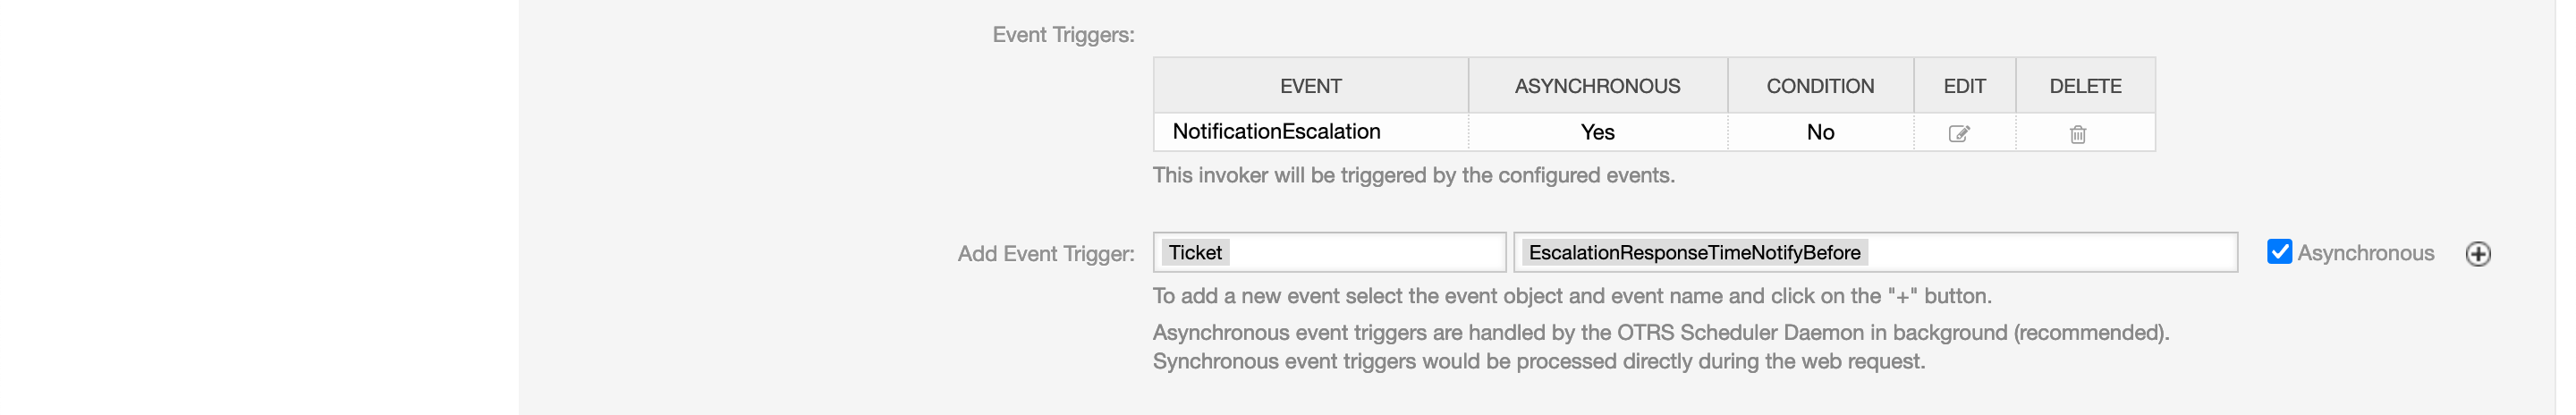 Configure the Event triger